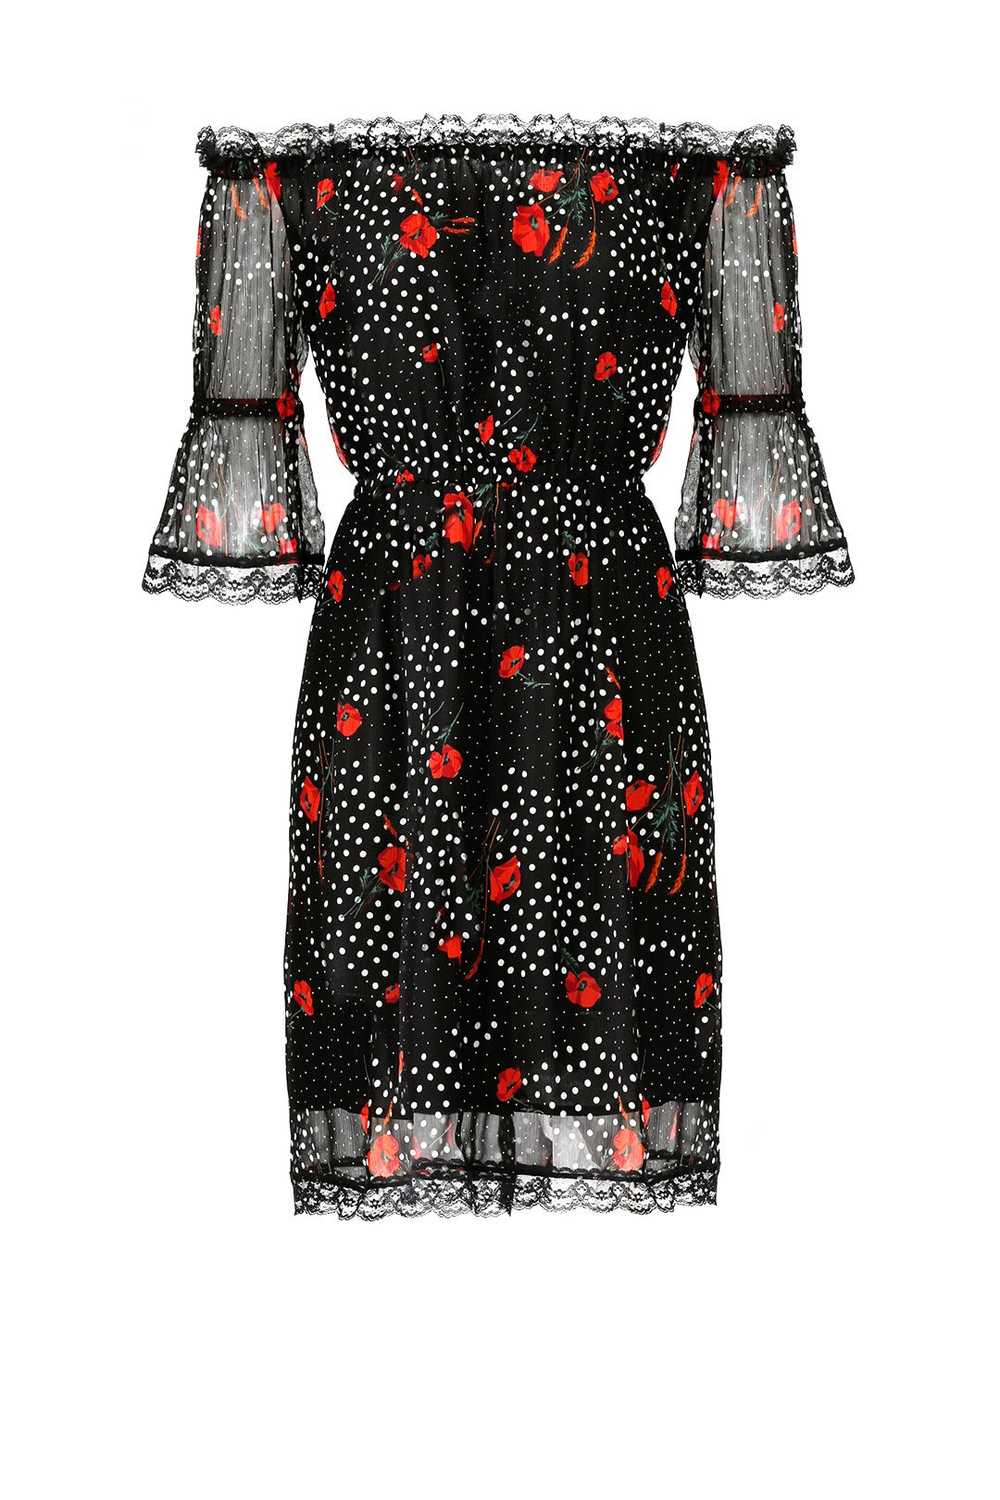 The Kooples Black Popi Print Dress - image 4